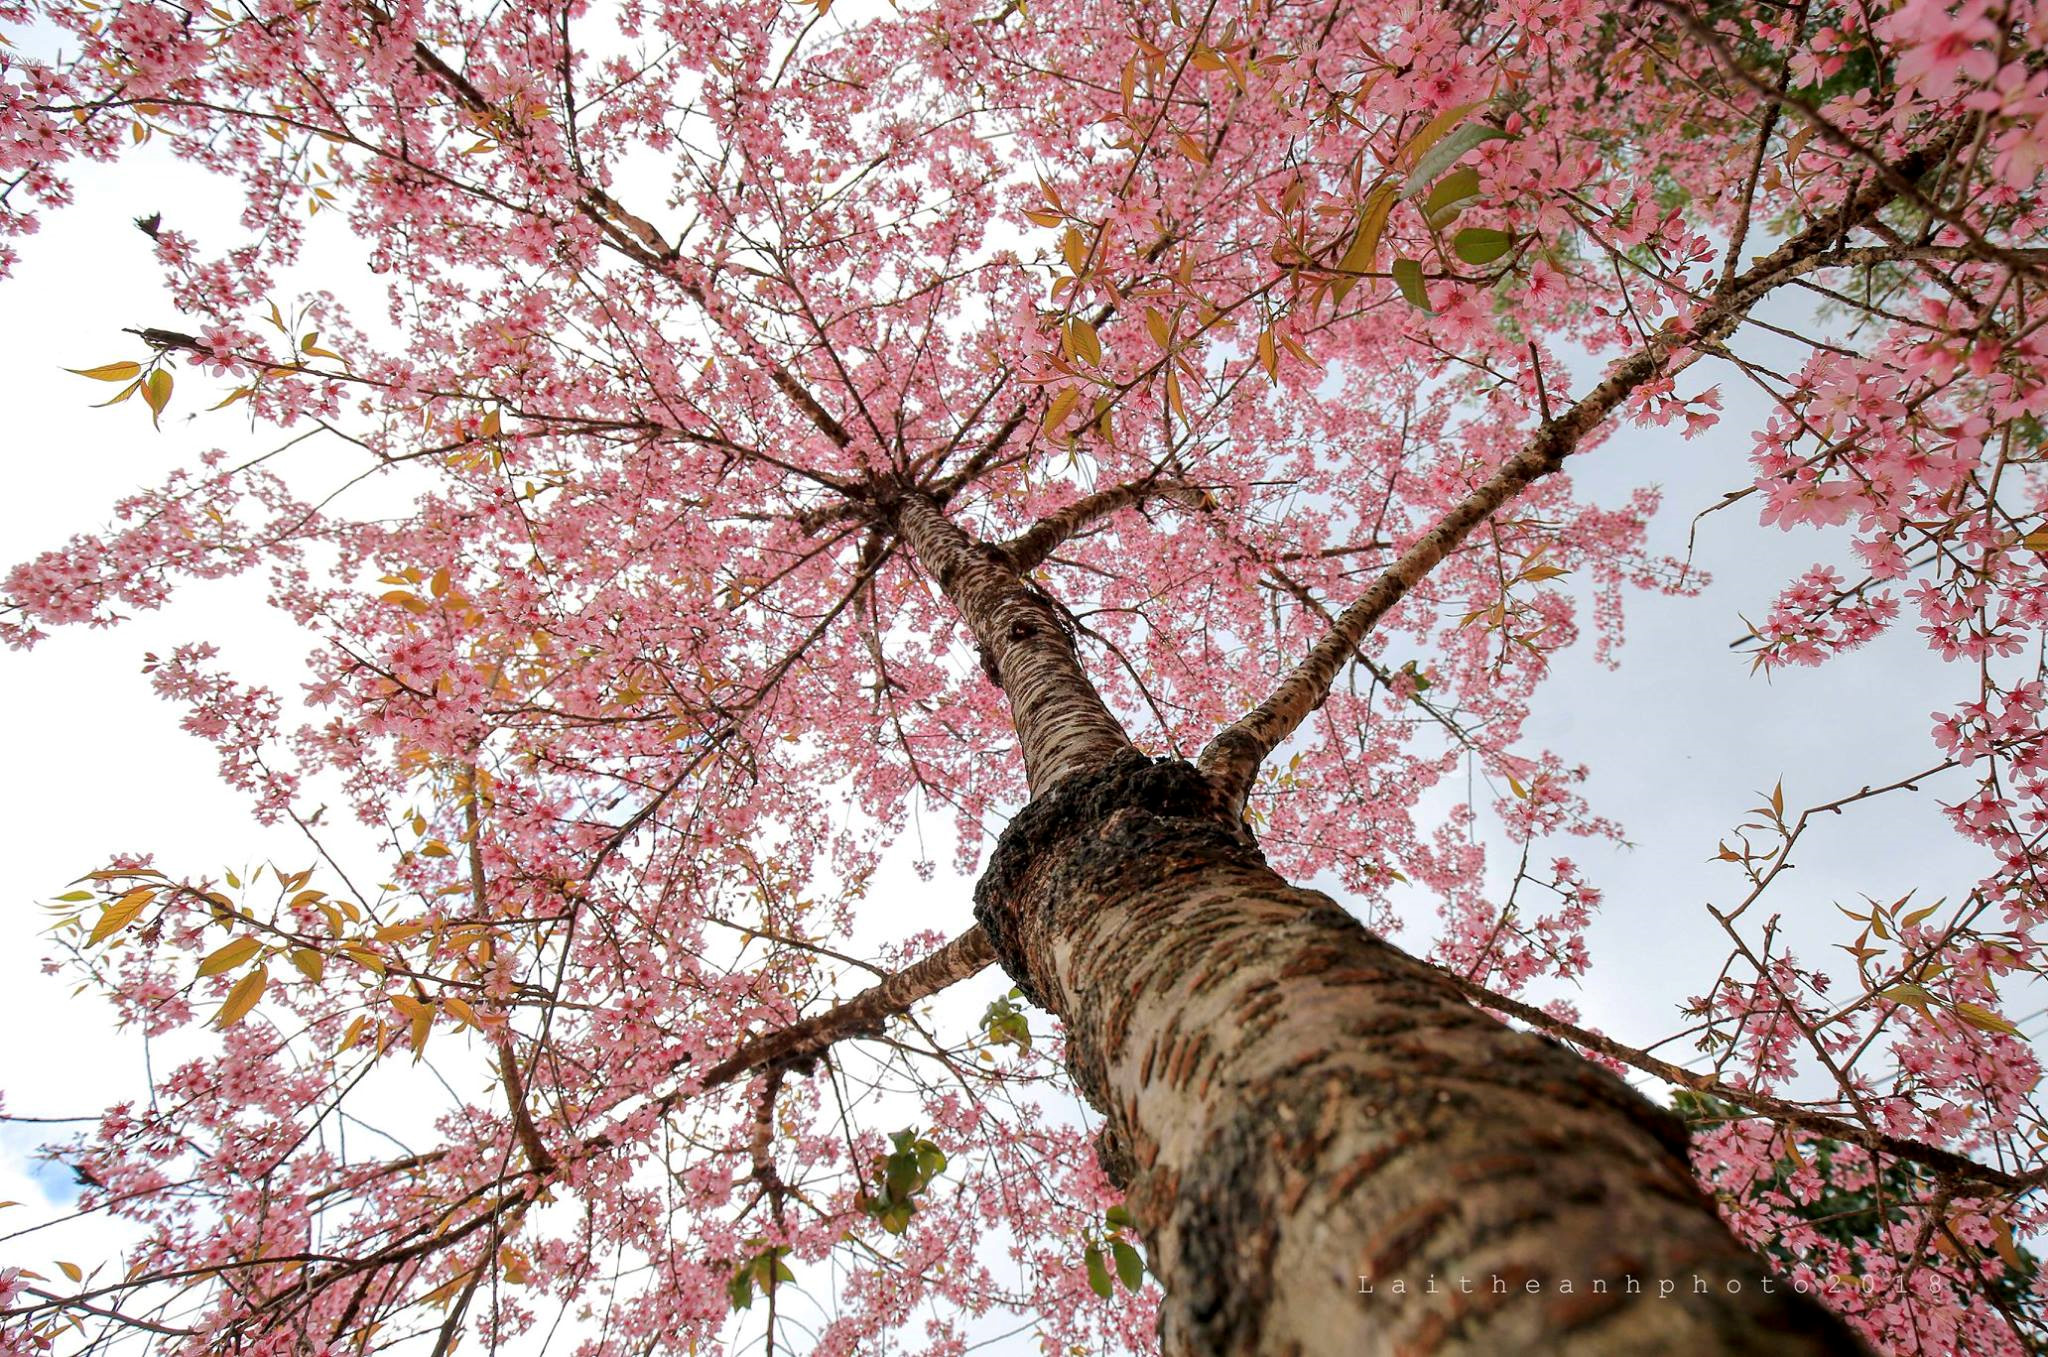 Cherry blossoms lure tourists to Da Lat, travel news, Vietnam guide, Vietnam airlines, Vietnam tour, tour Vietnam, Hanoi, ho chi minh city, Saigon, travelling to Vietnam, Vietnam travelling, Vietnam travel, vn news